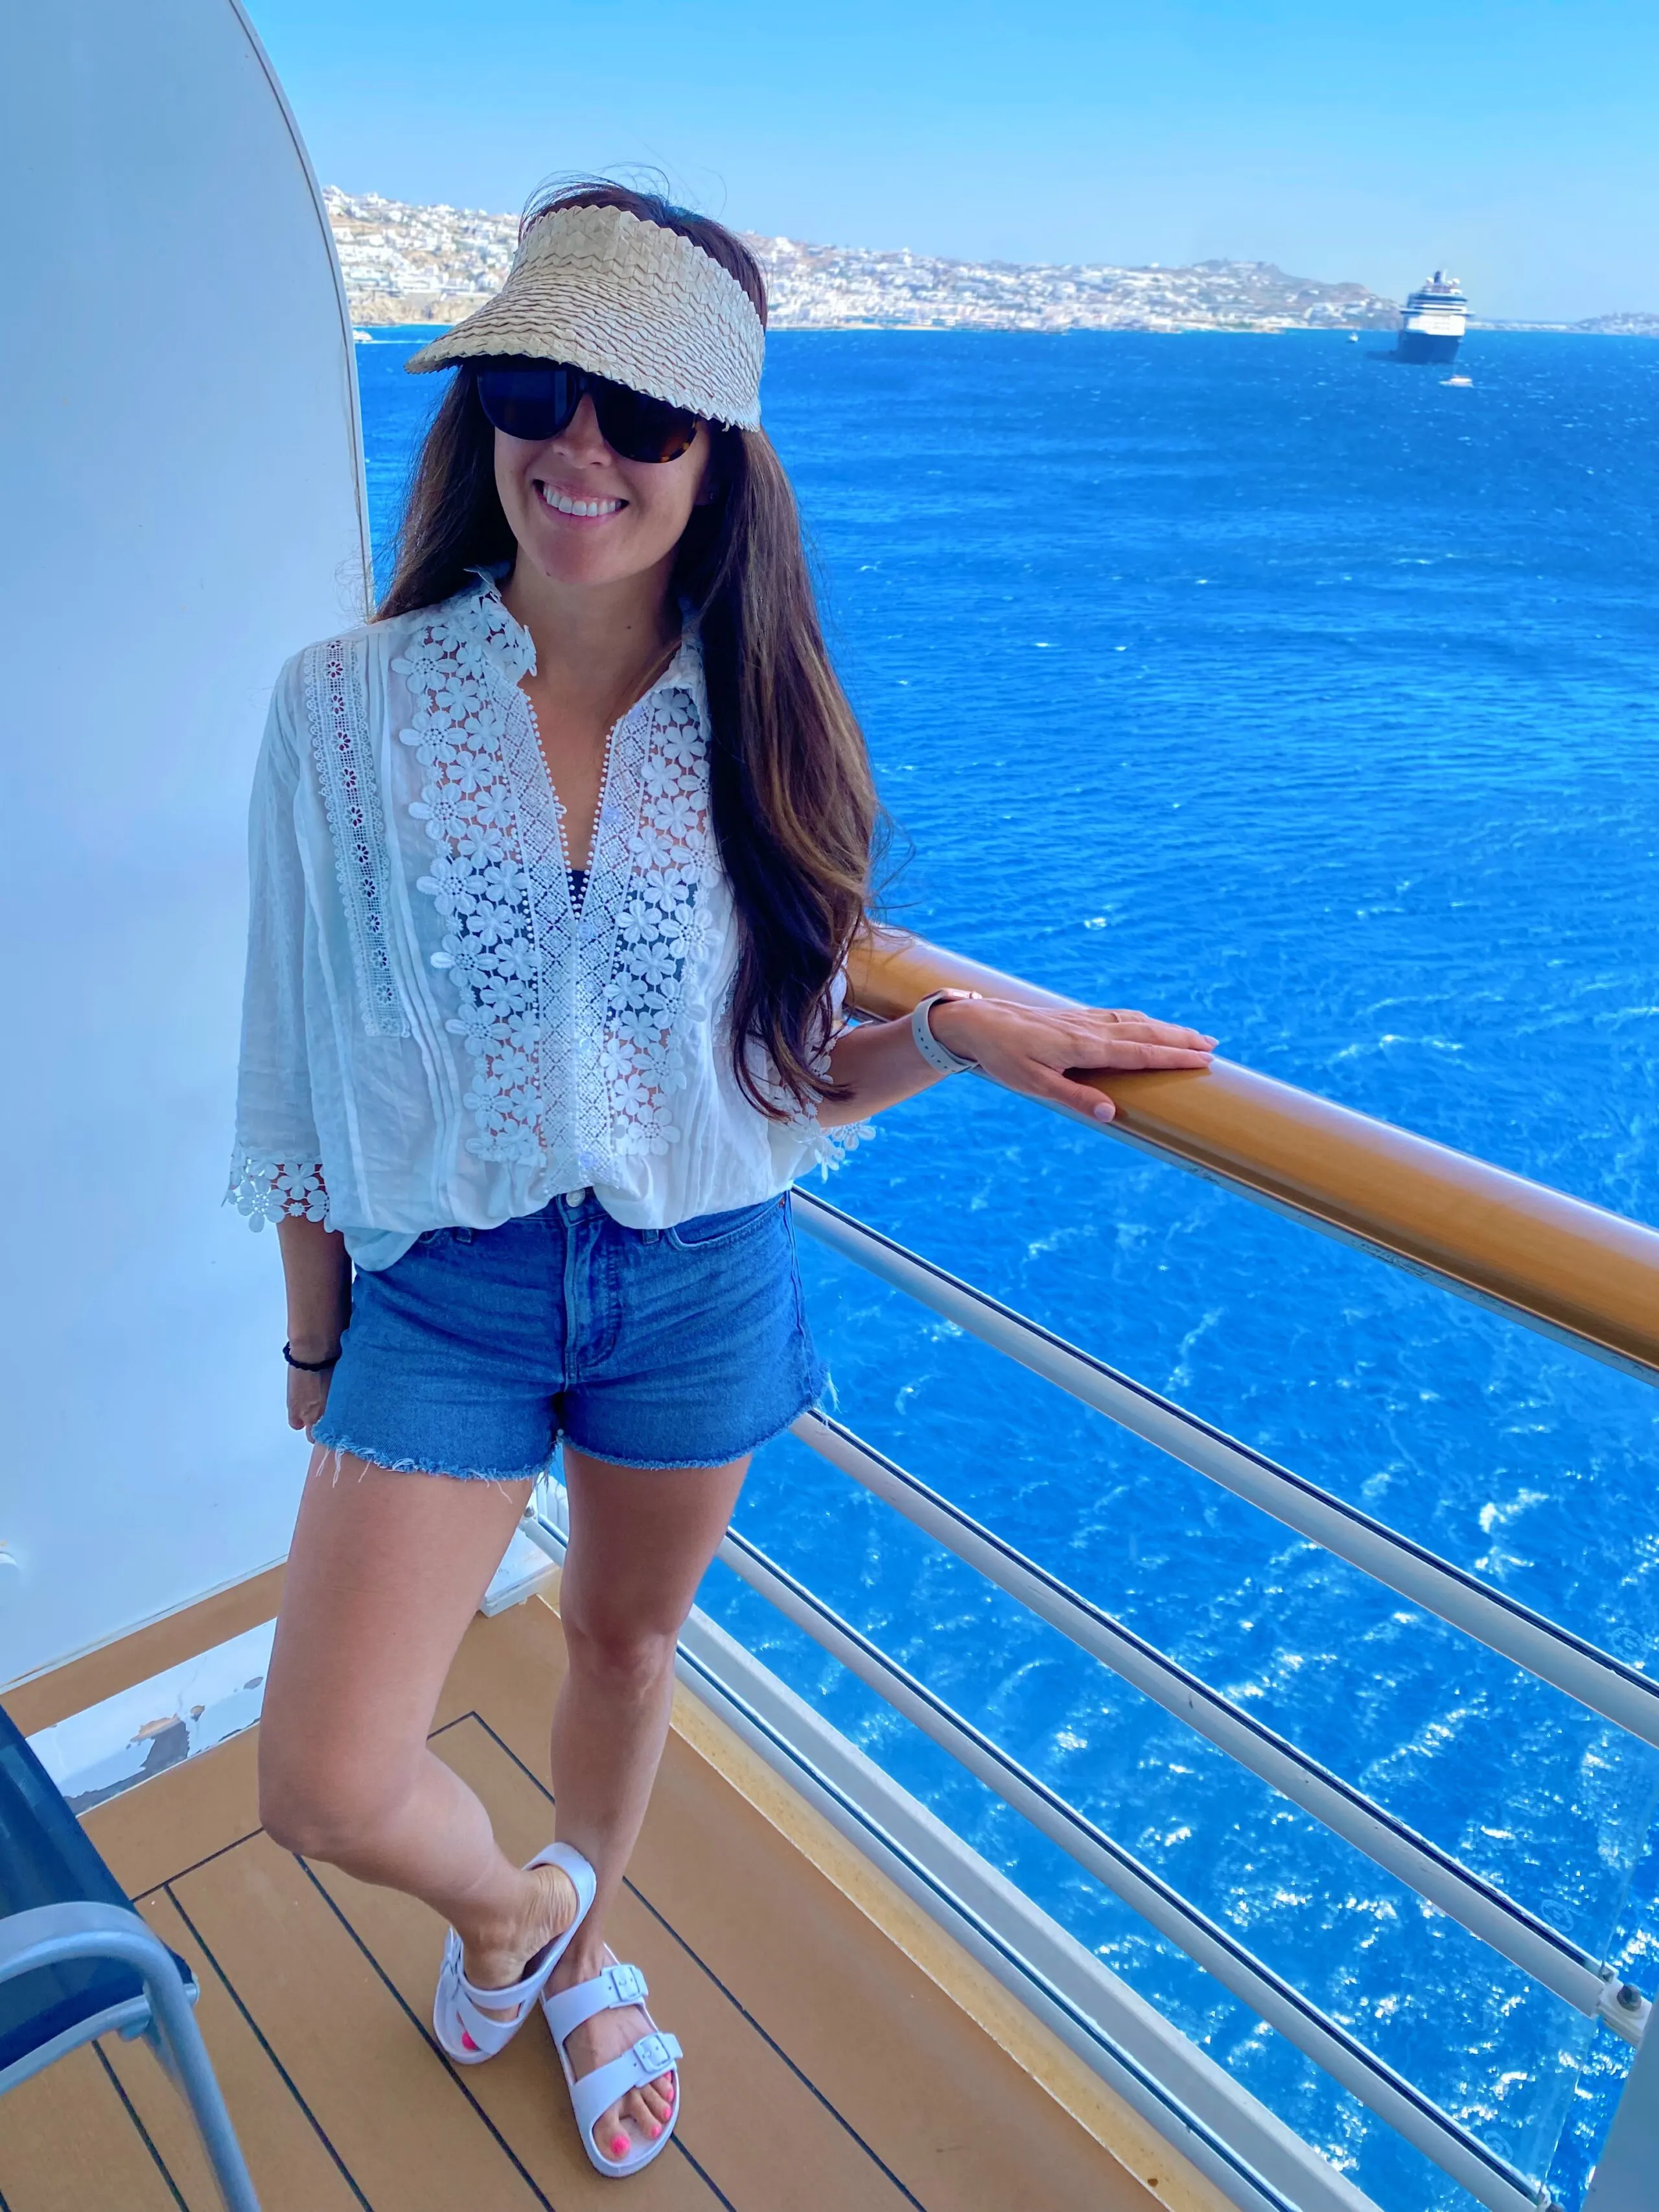 disney dream cruise mediterranean